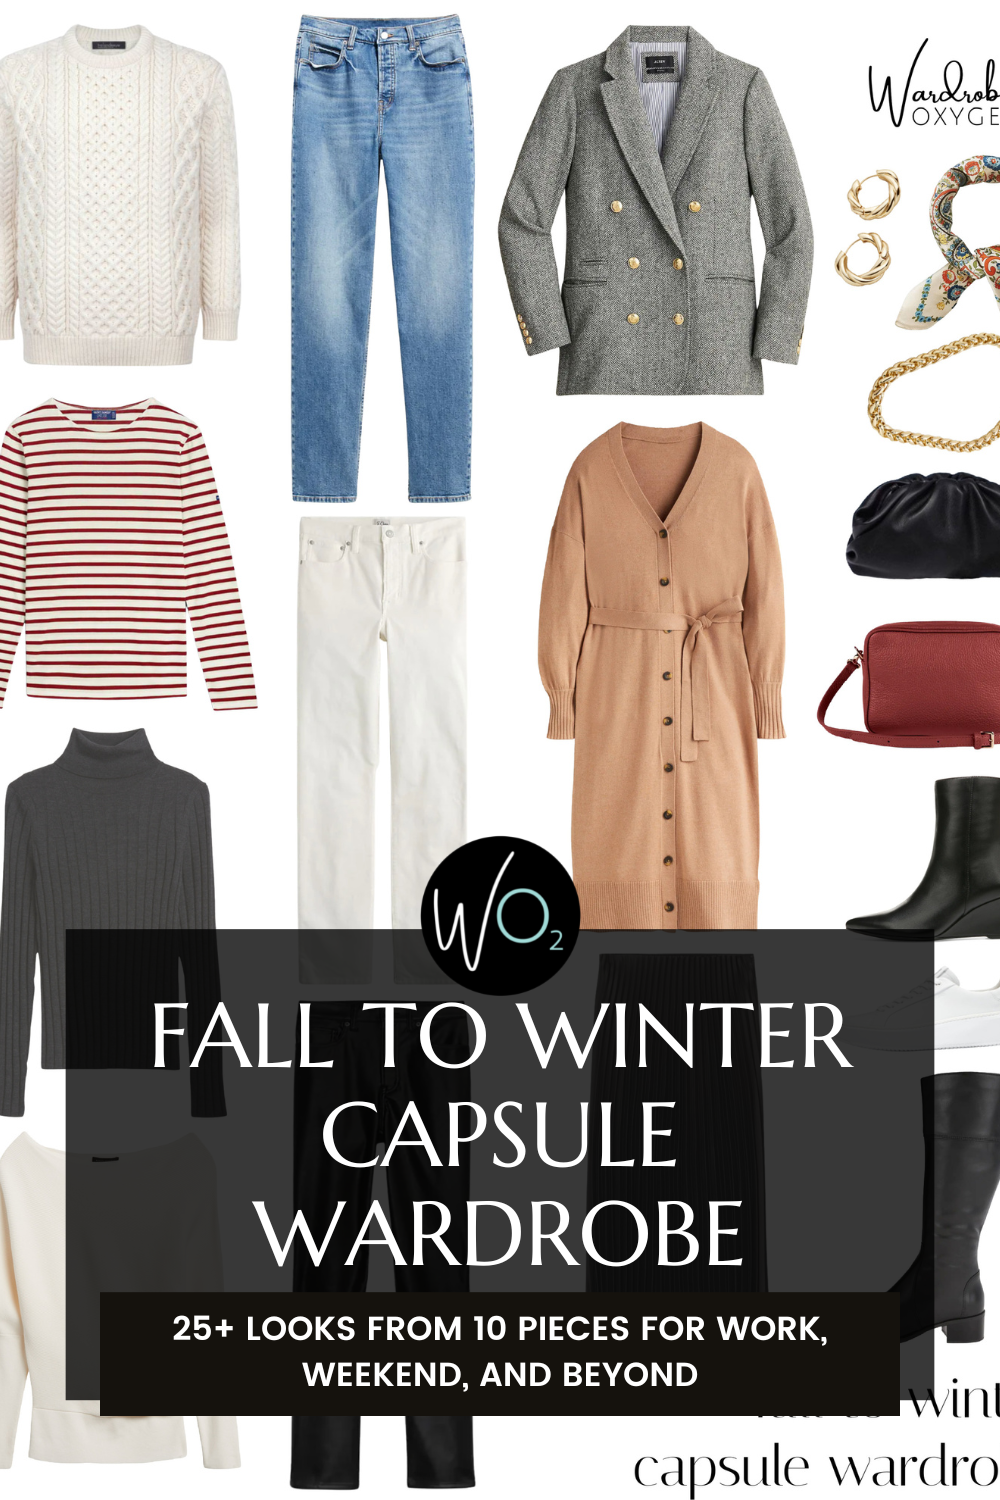 Fall to Winter Capsule Wardrobe: 25+ Looks for Work, Weekend